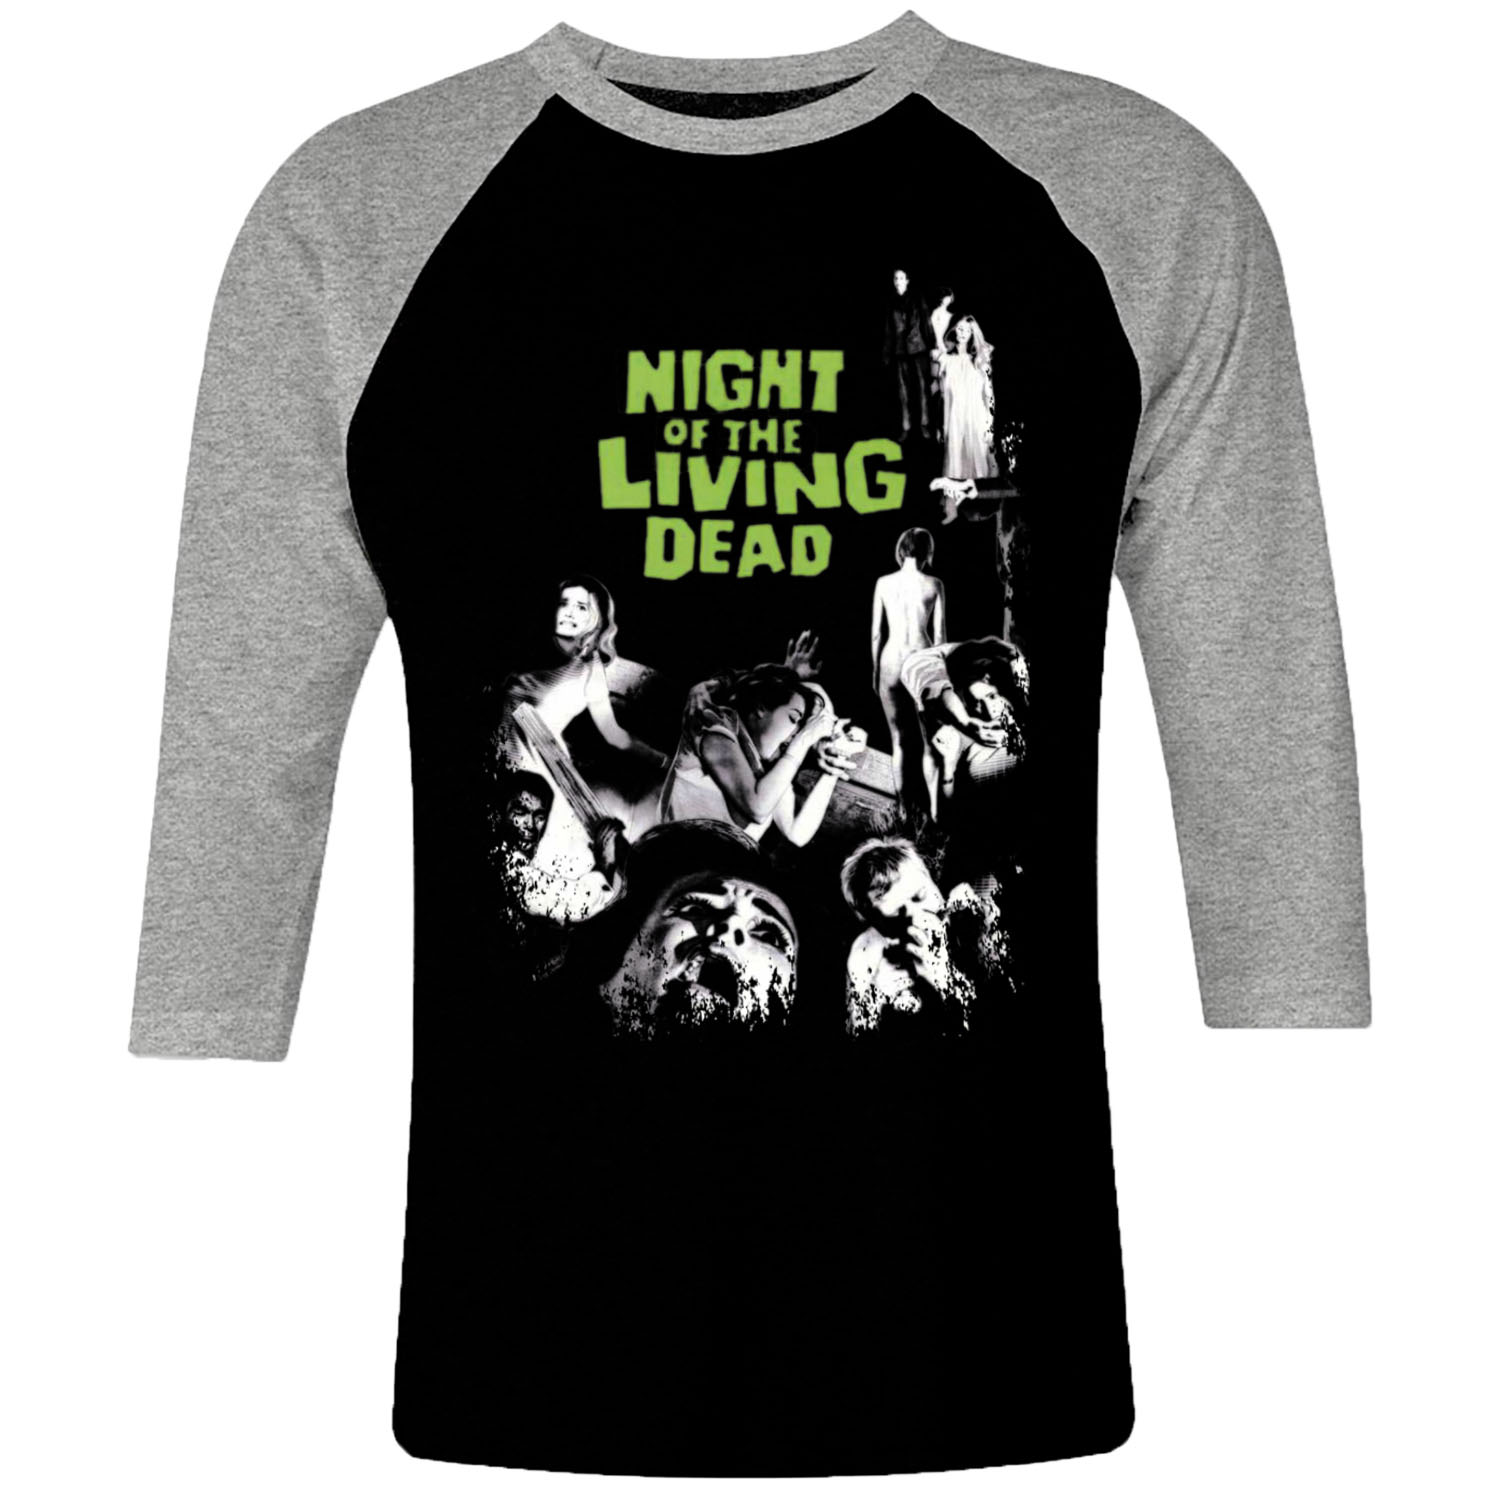 Night of the Living Dead movie raglan 3/4 sleeve t-shirt